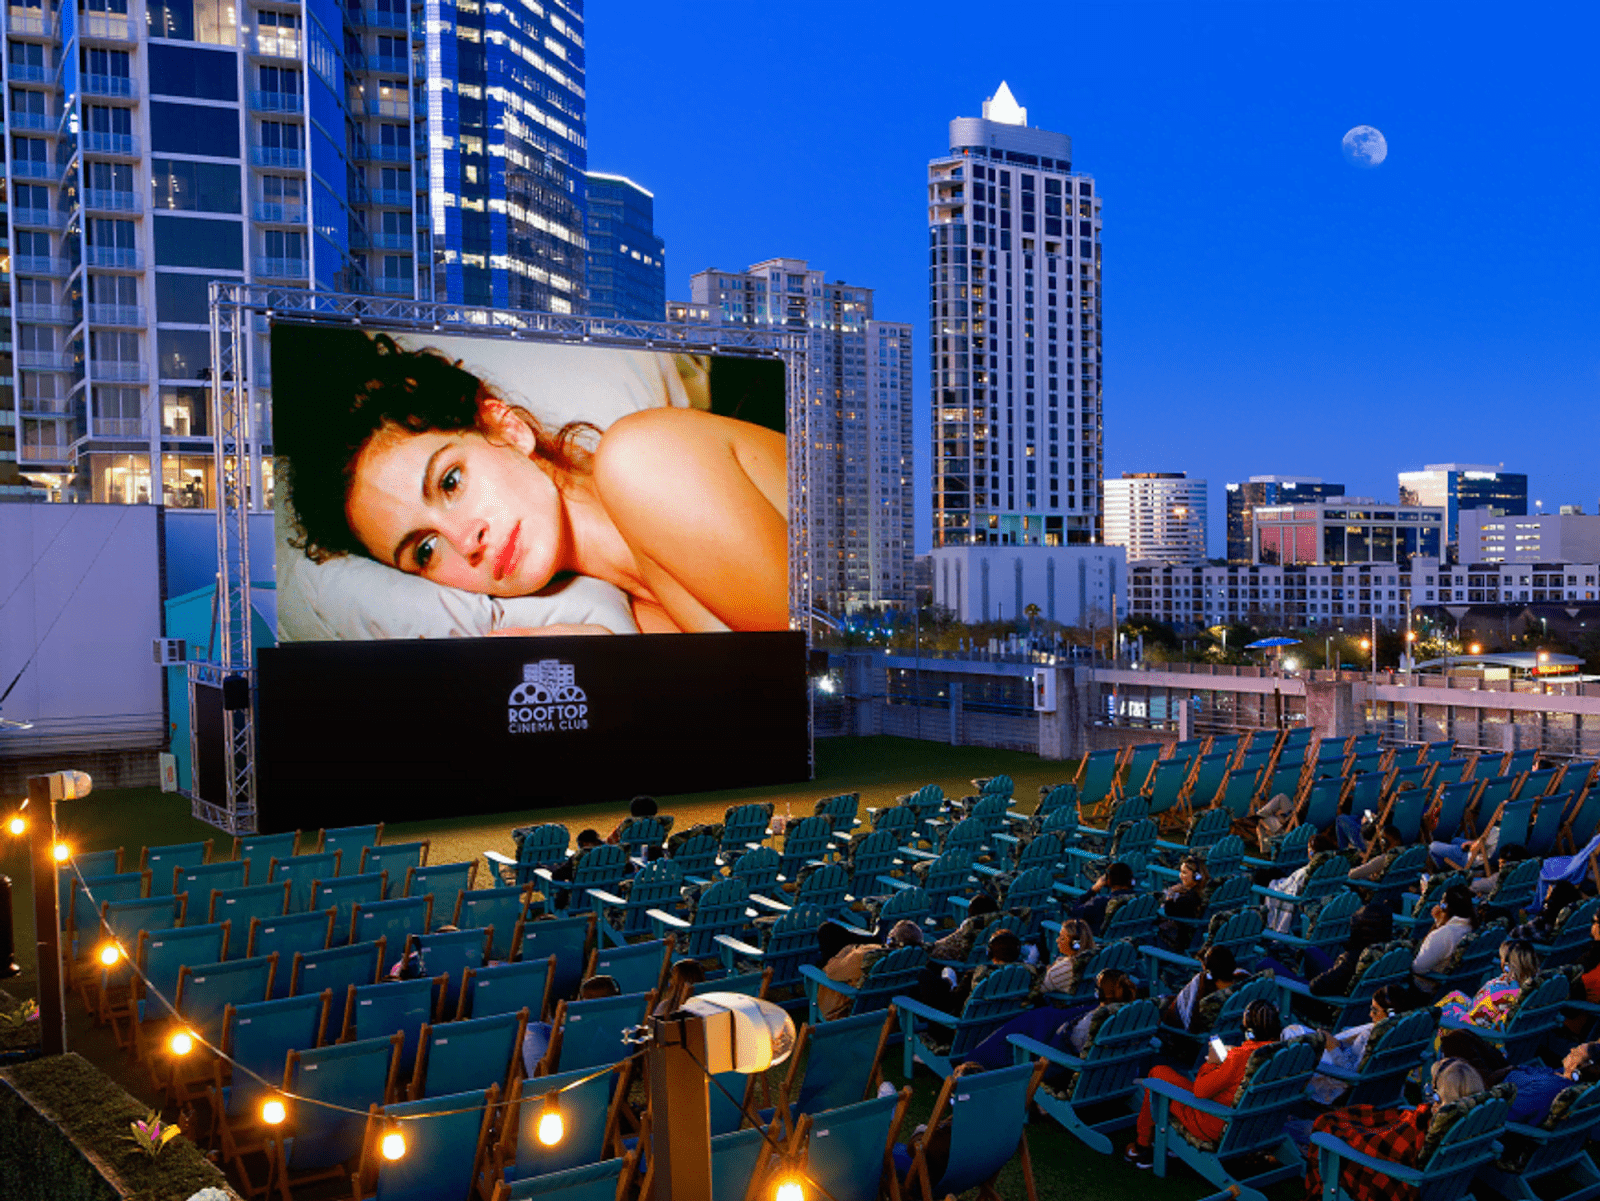 Houston rooftop cinema